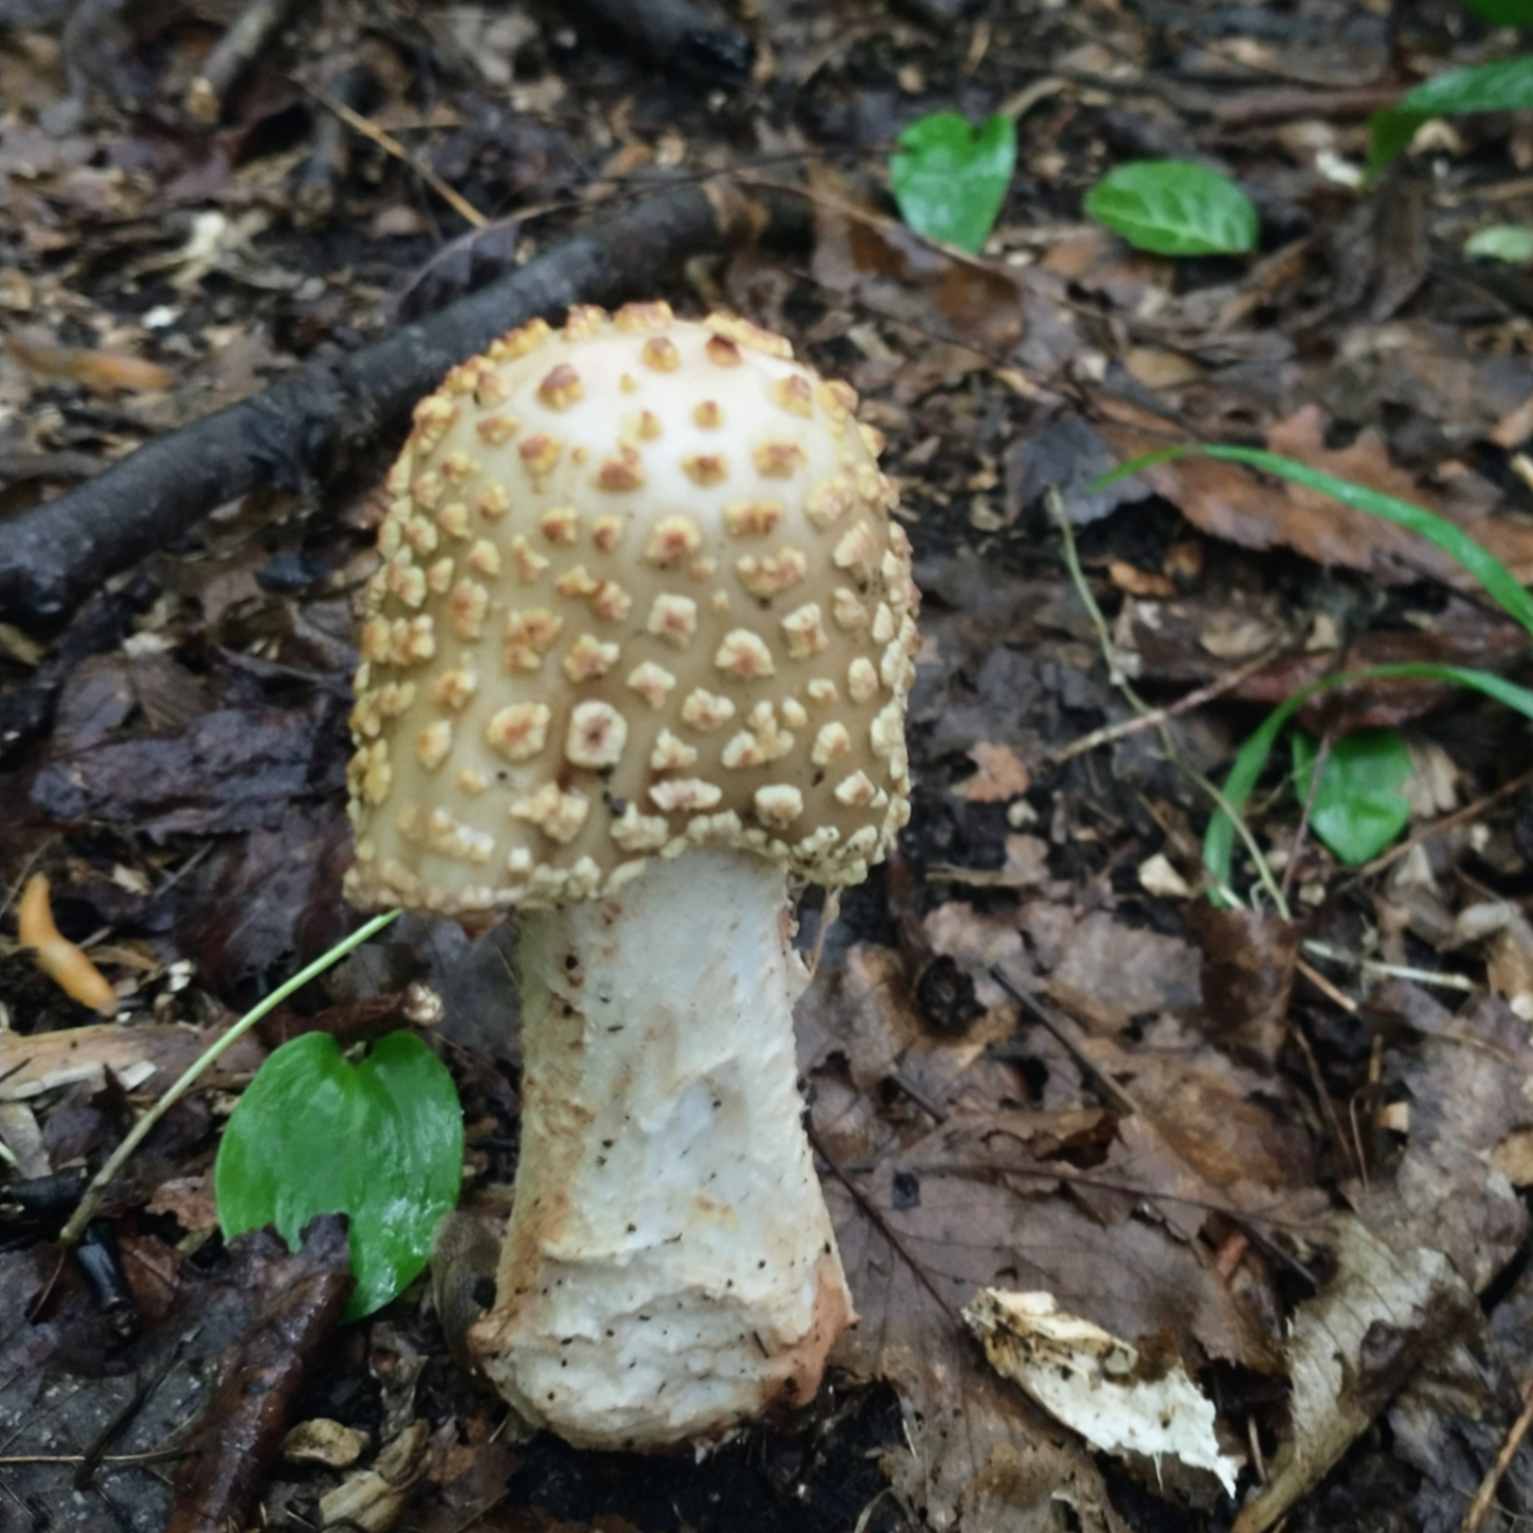 Possible Amanita mushroom.